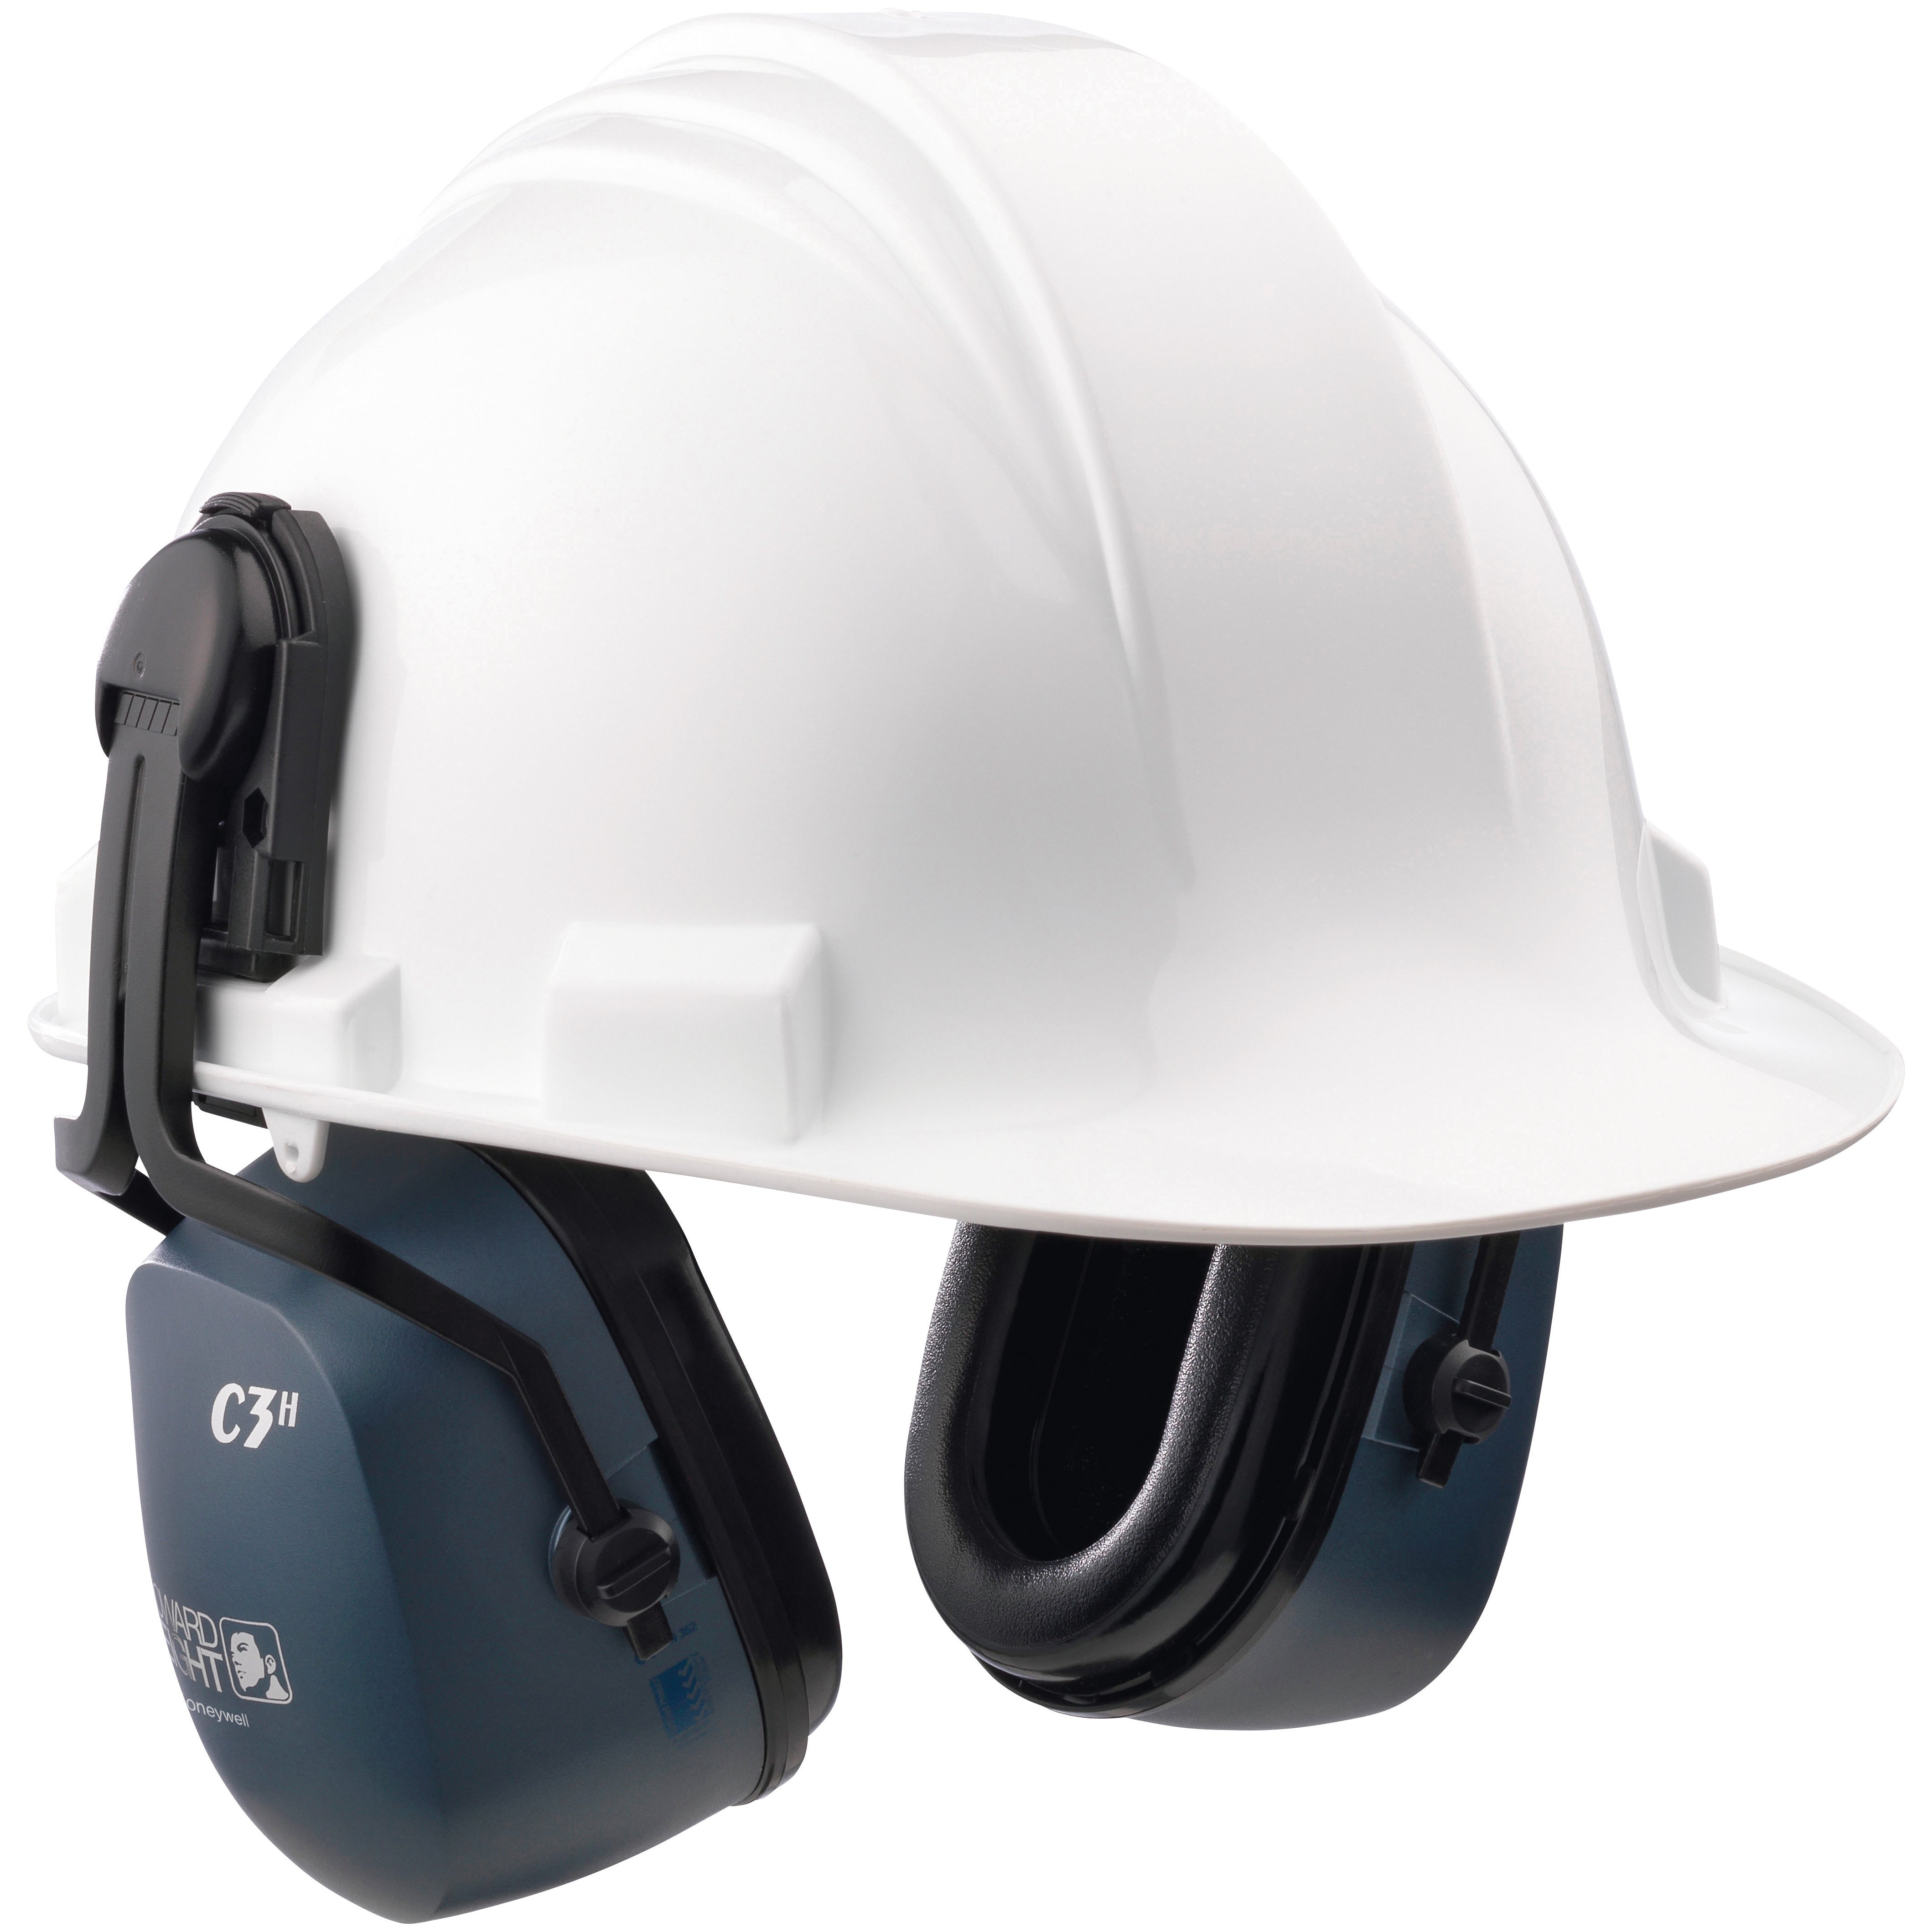 Honeywell Howard Leight Clarity C3H Helmet Mounted Earmuff - SNR 30 dB